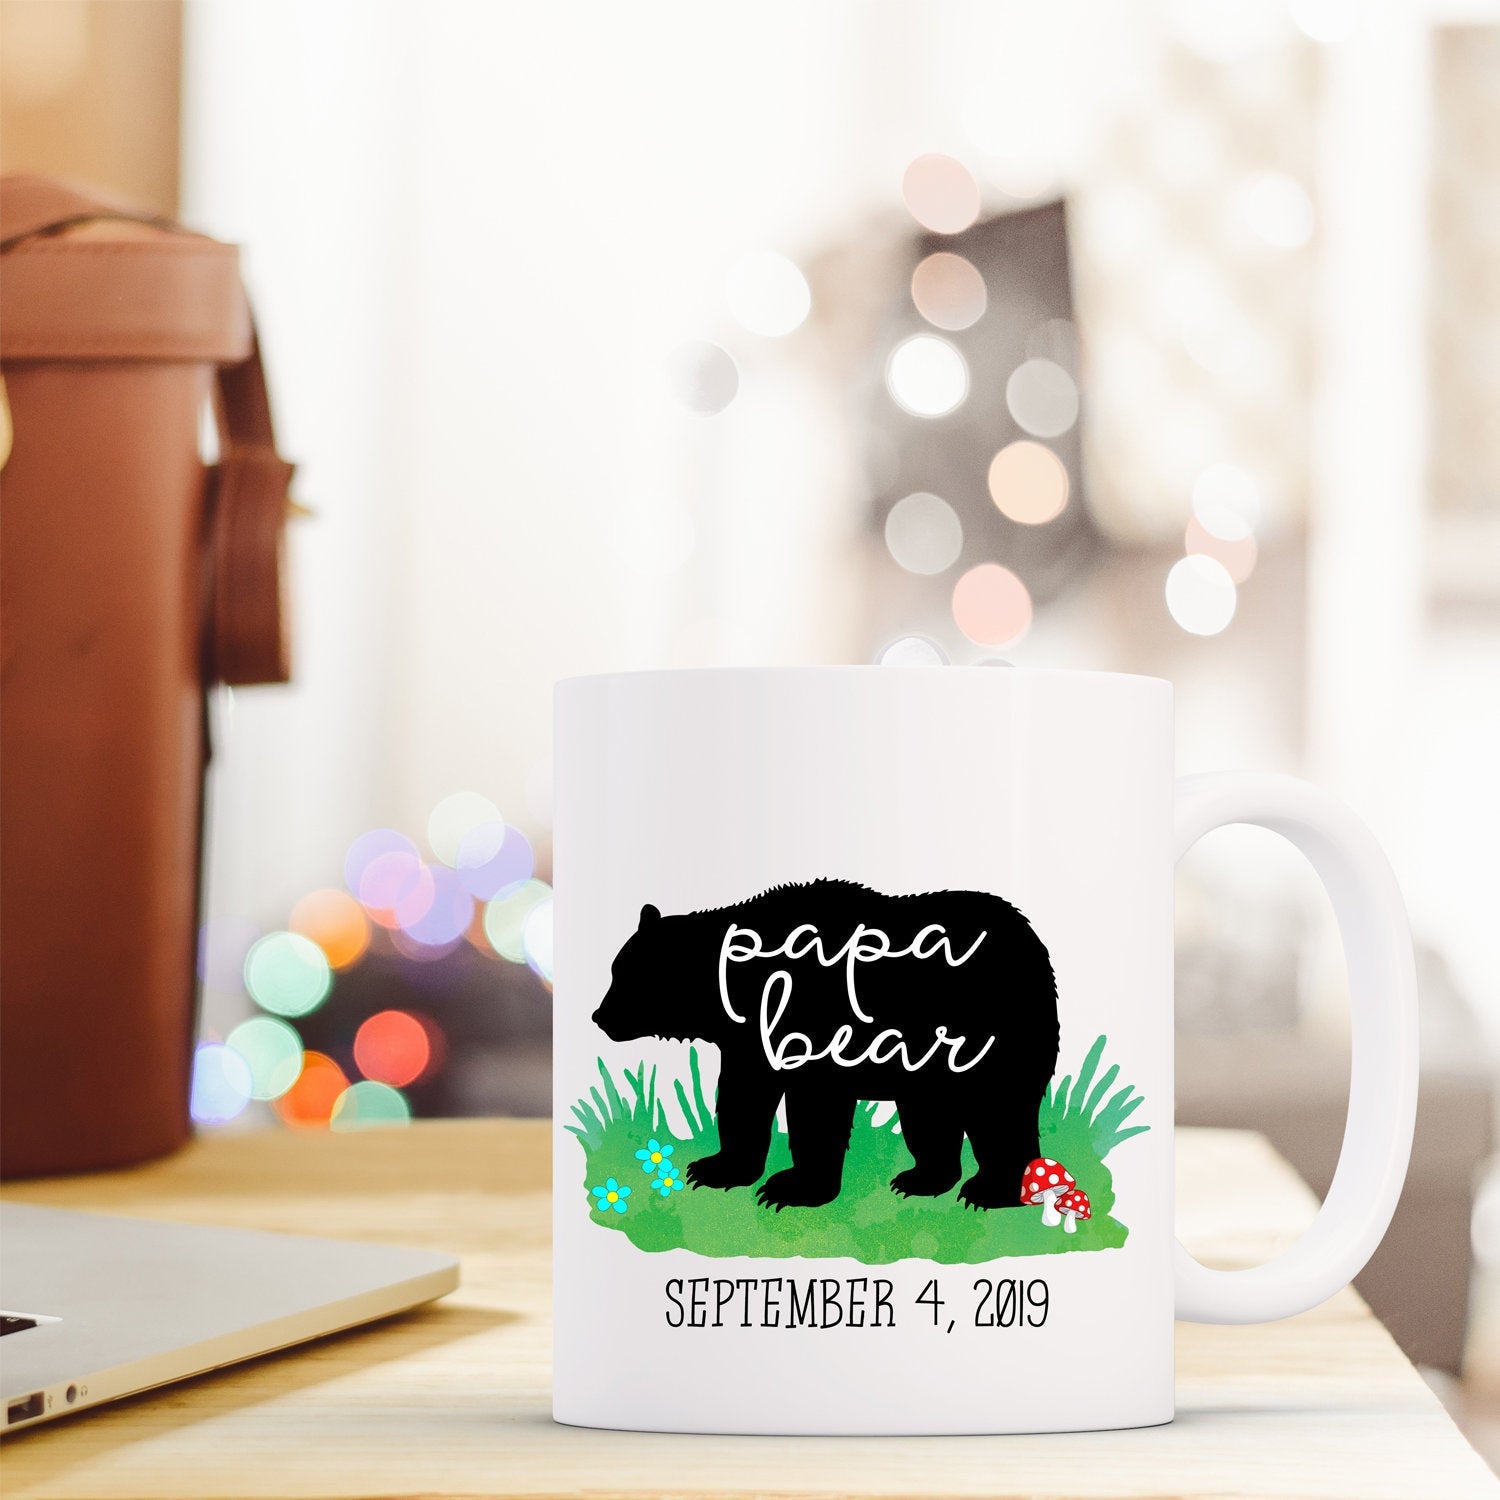 personalized coffee mugs, custom mug set mama bear and papa bear